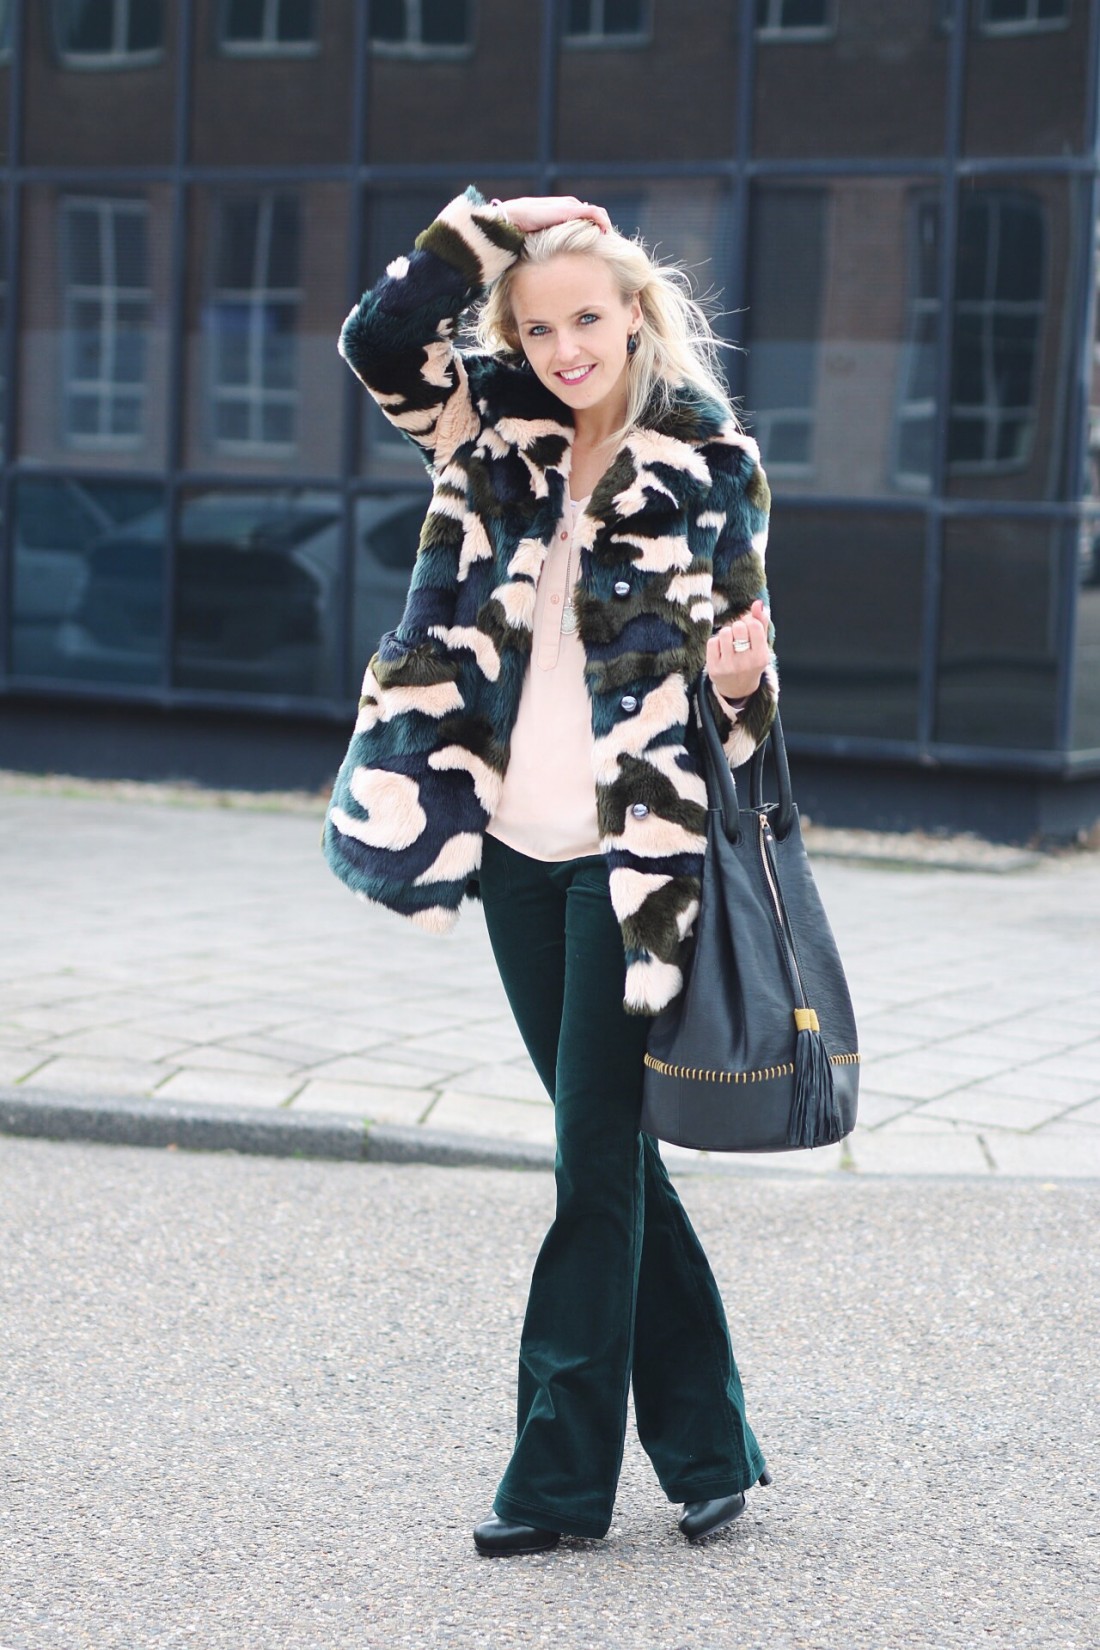 Bag at You - Fashion blog - Look Amayzine - Stieglitz Bag and Topshop Jacket